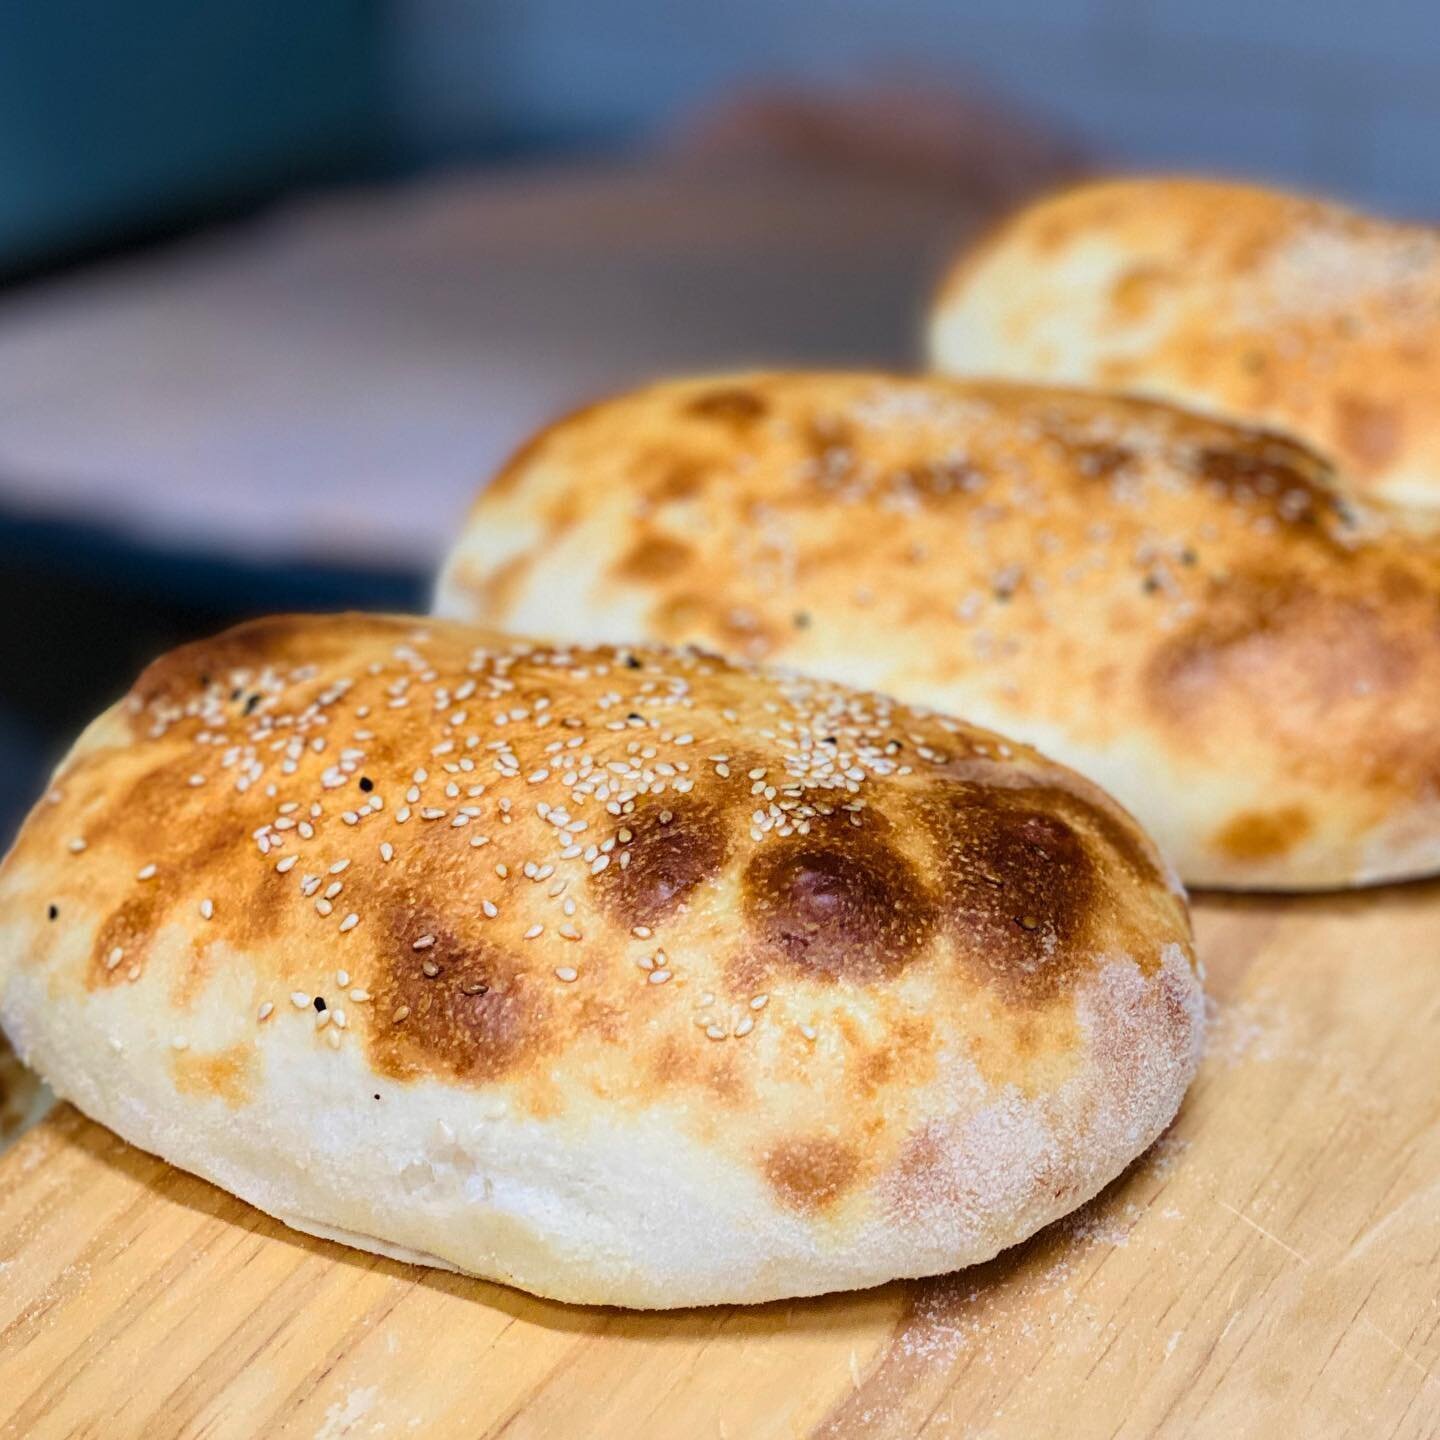 Freshly baked in-house Turkish bread rolls 😍

#turkishbread #kebabs #anatoliangrill